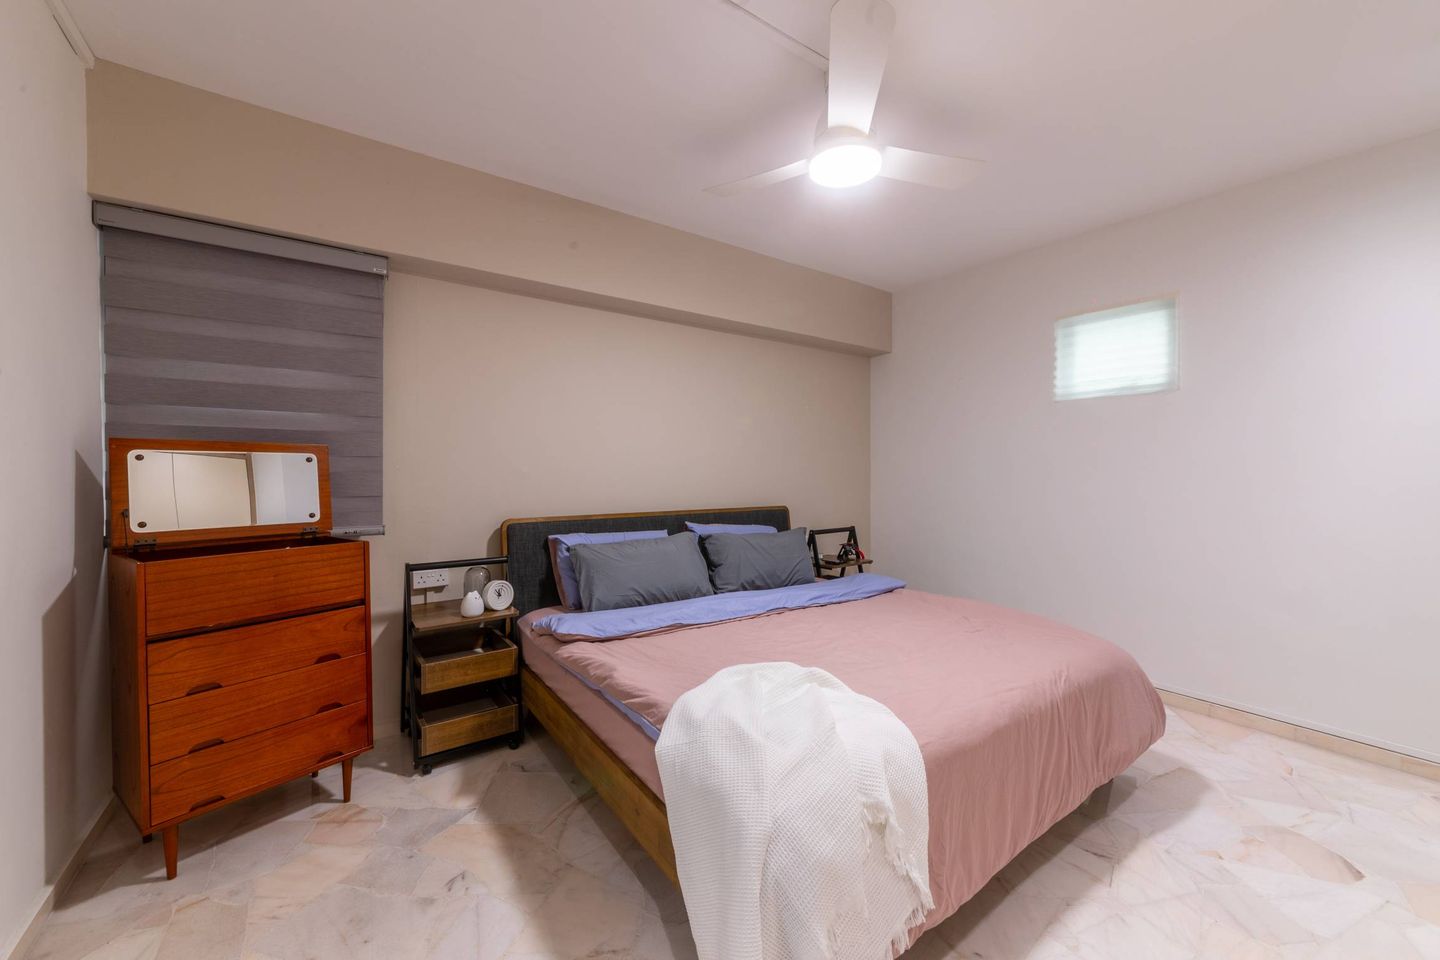 Minimal Master Bedroom Design - Livspace